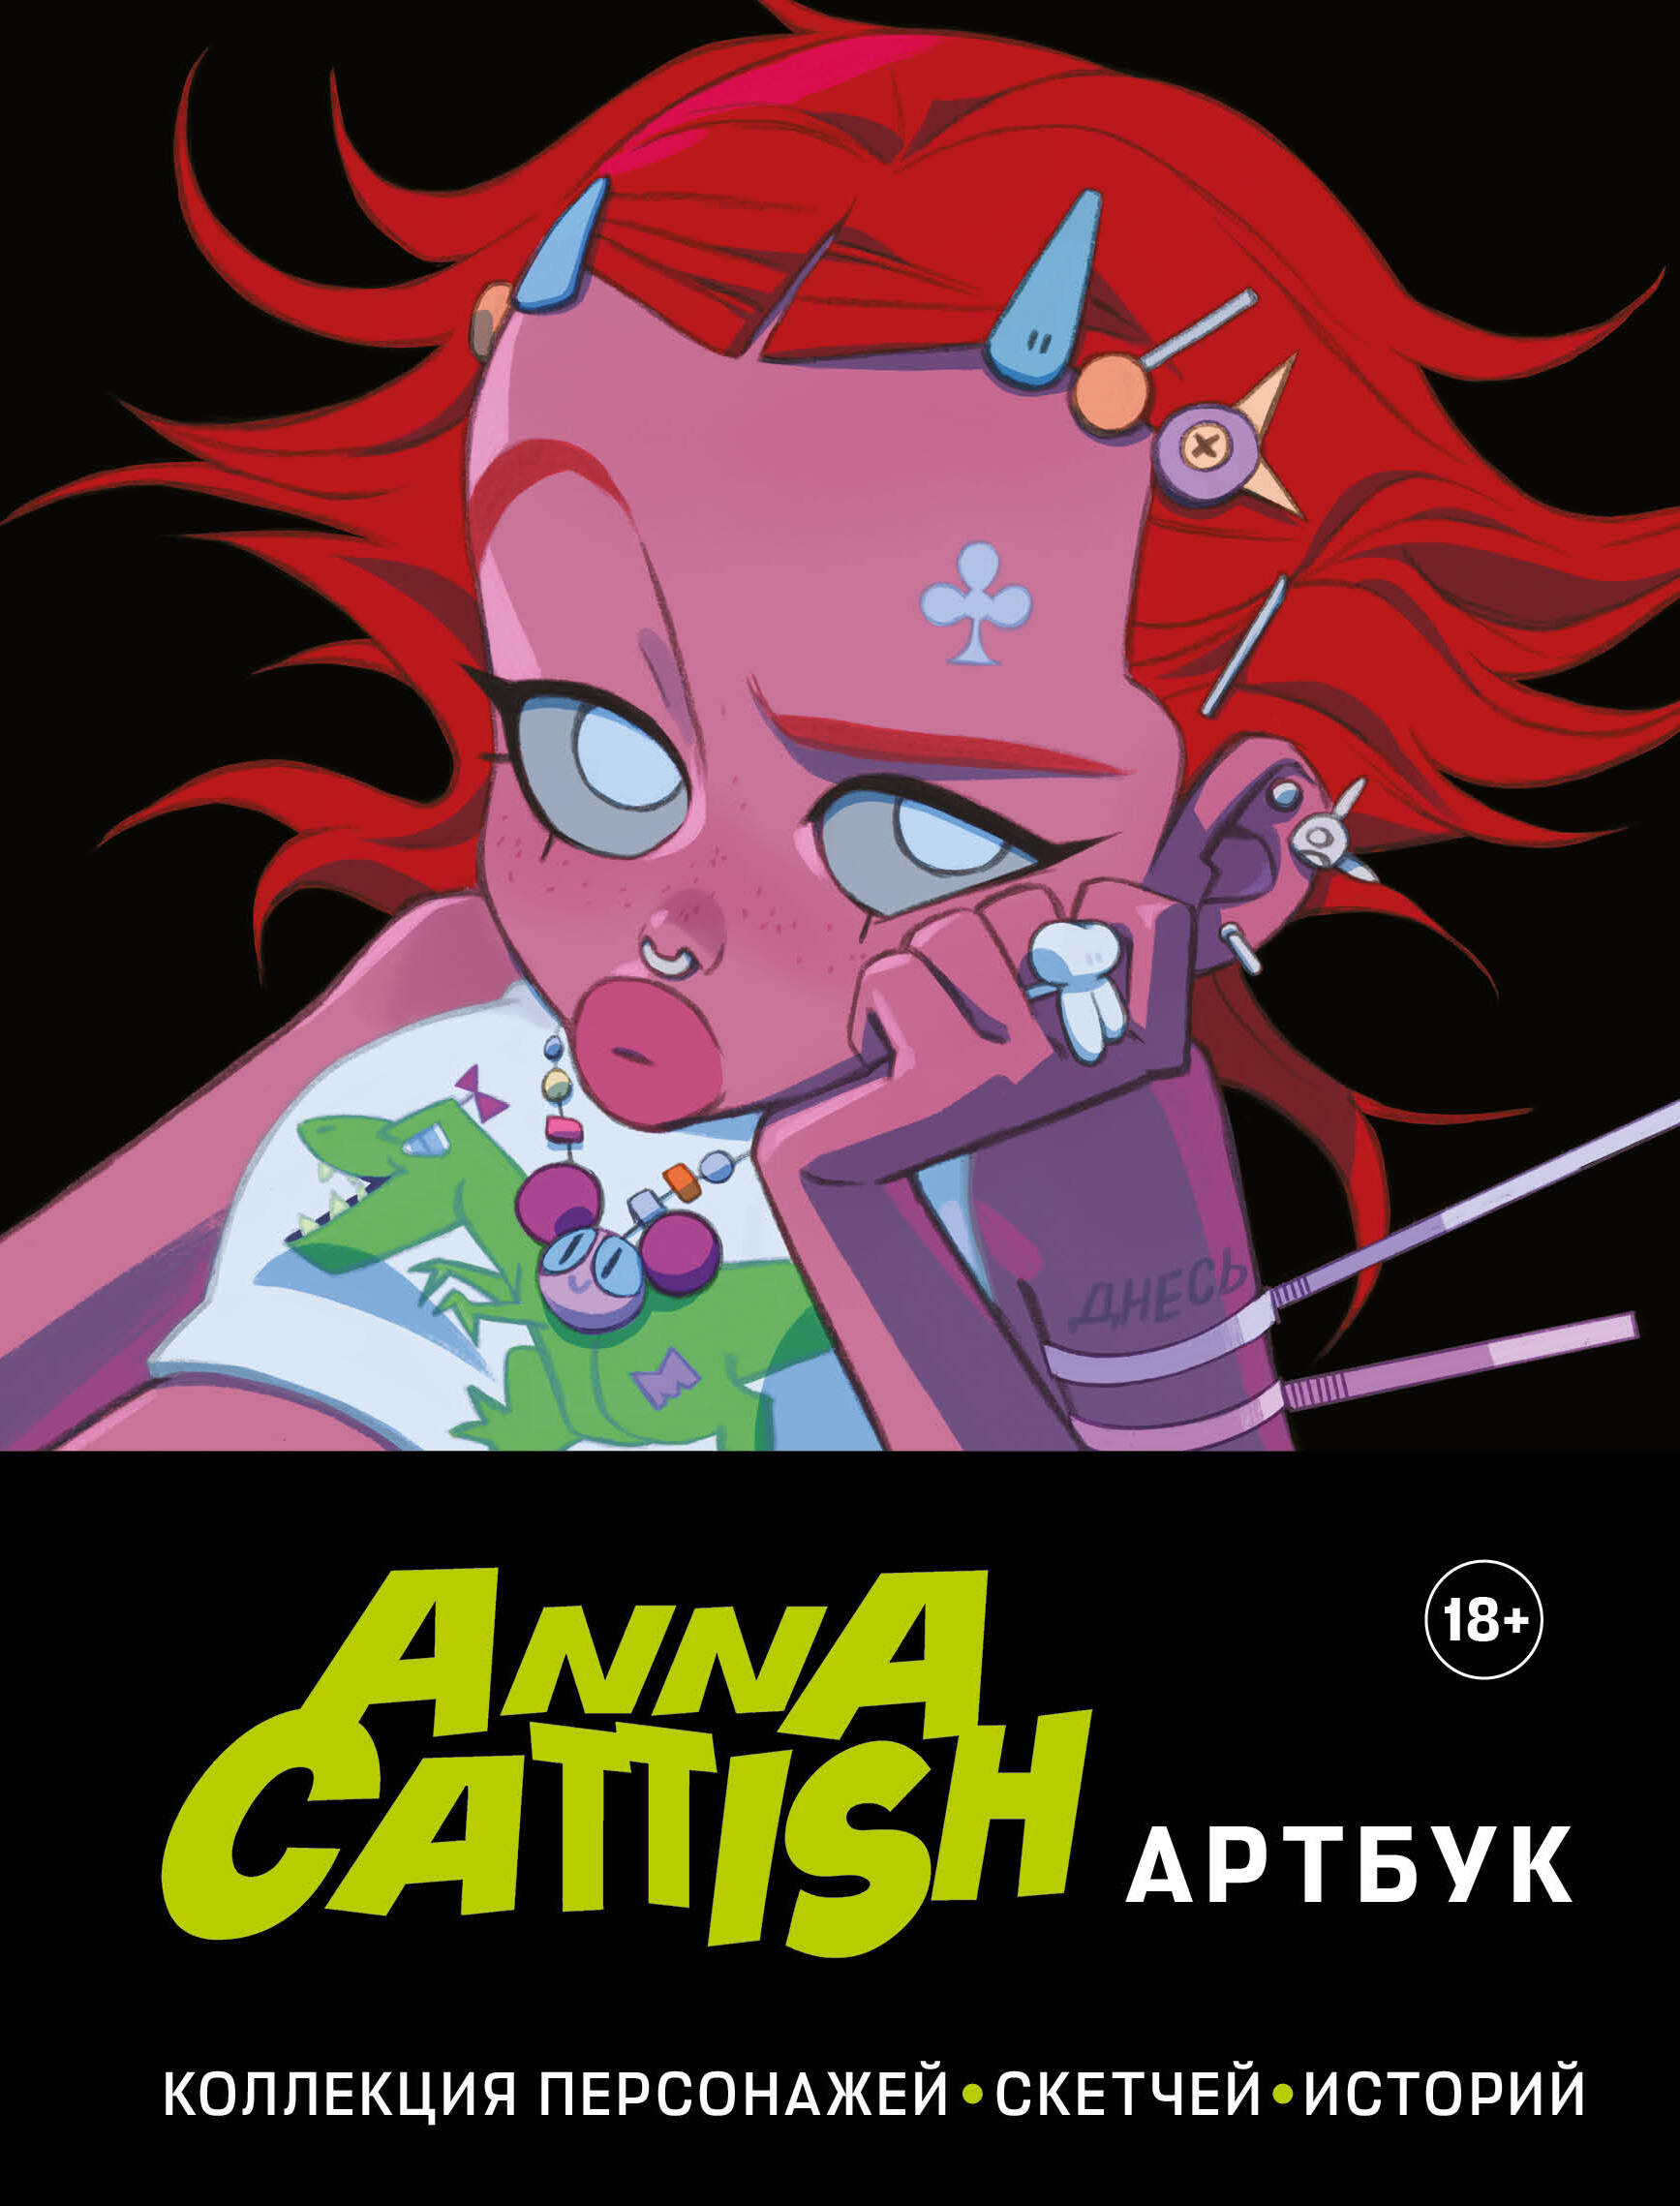 Anna Cattish   